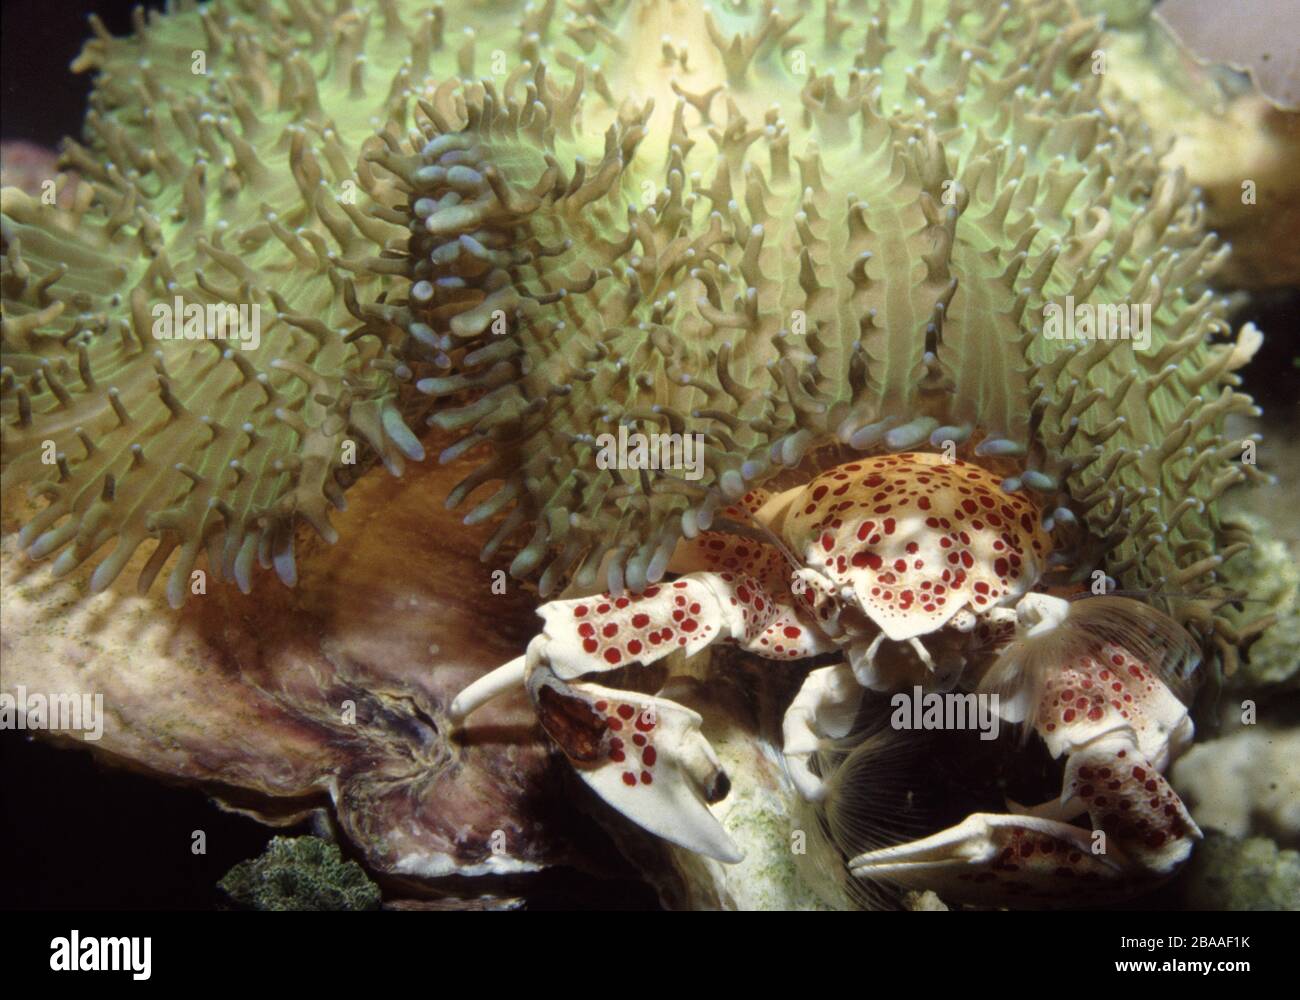 Porcelain anemone crab (Neopetrolisthes ohshimai) commensal on mushroom coral (Rhodactis sp.) Stock Photo